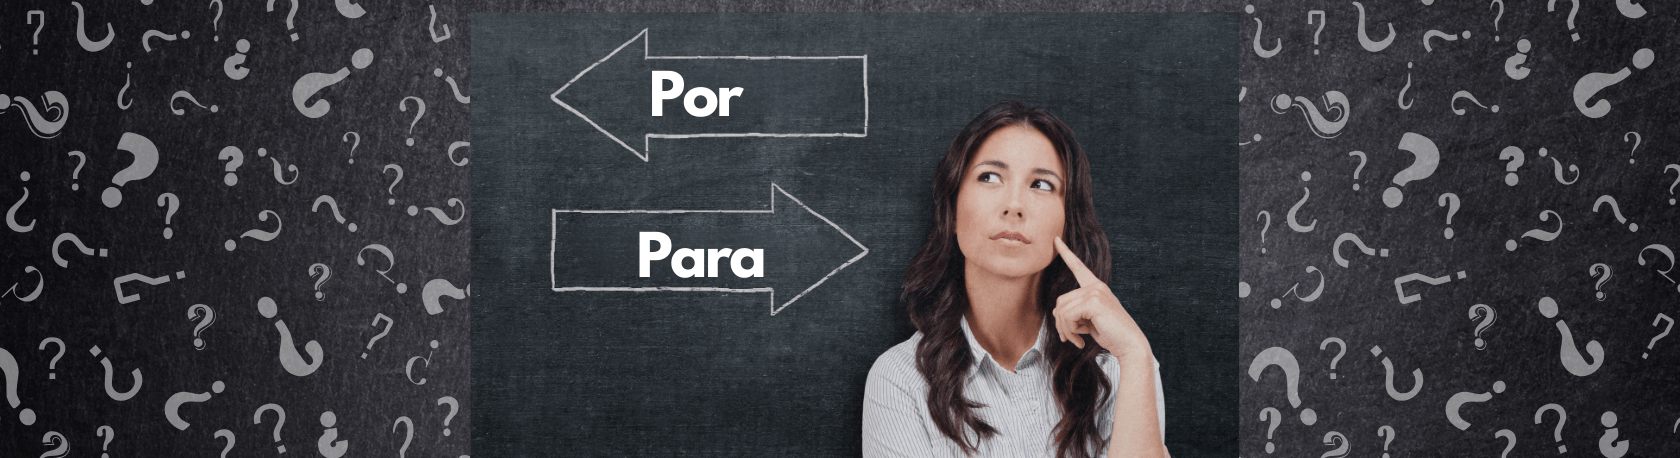 Master the uses of POR y PARA (Lower Intermediates)